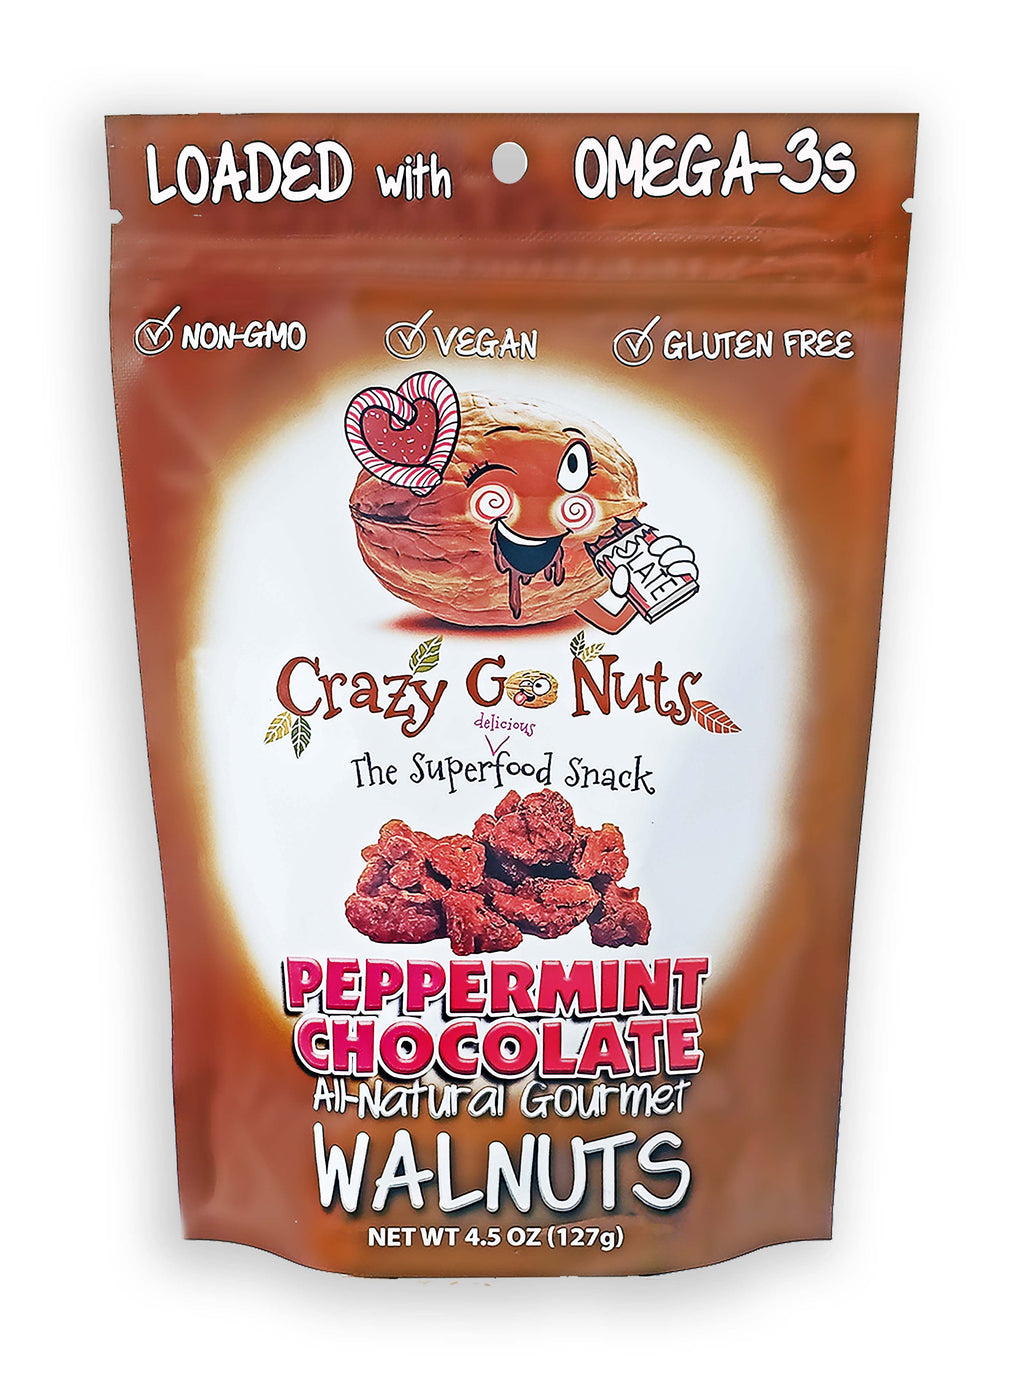 A bag of peppermint chocolate walnut snacks